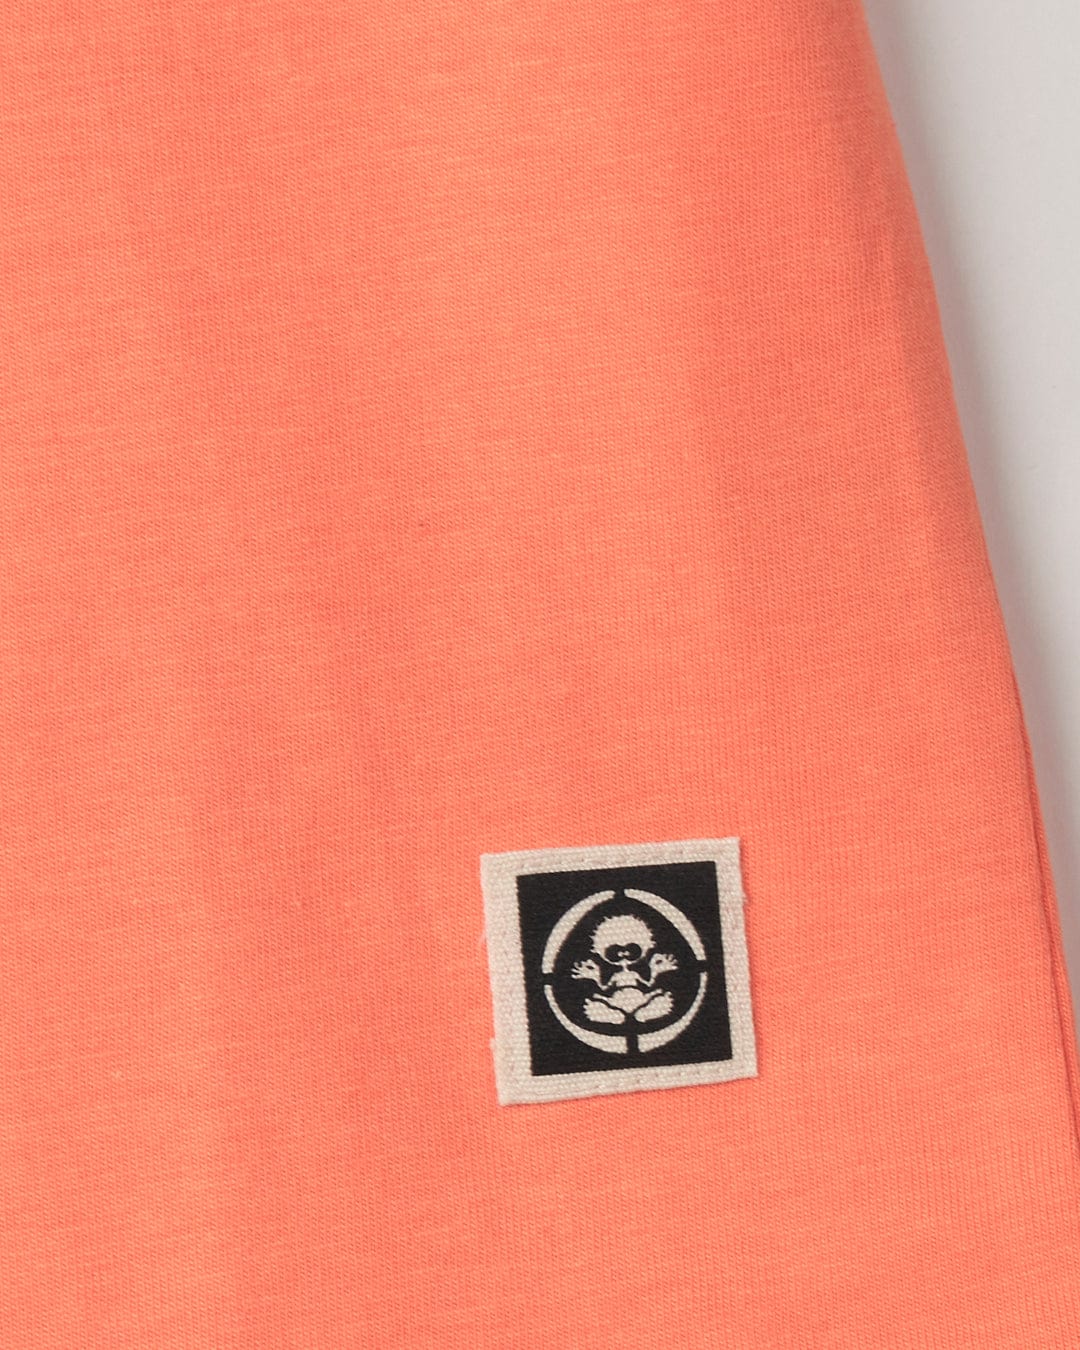 An orange cotton t-shirt with a black Saltrock branding logo on it.